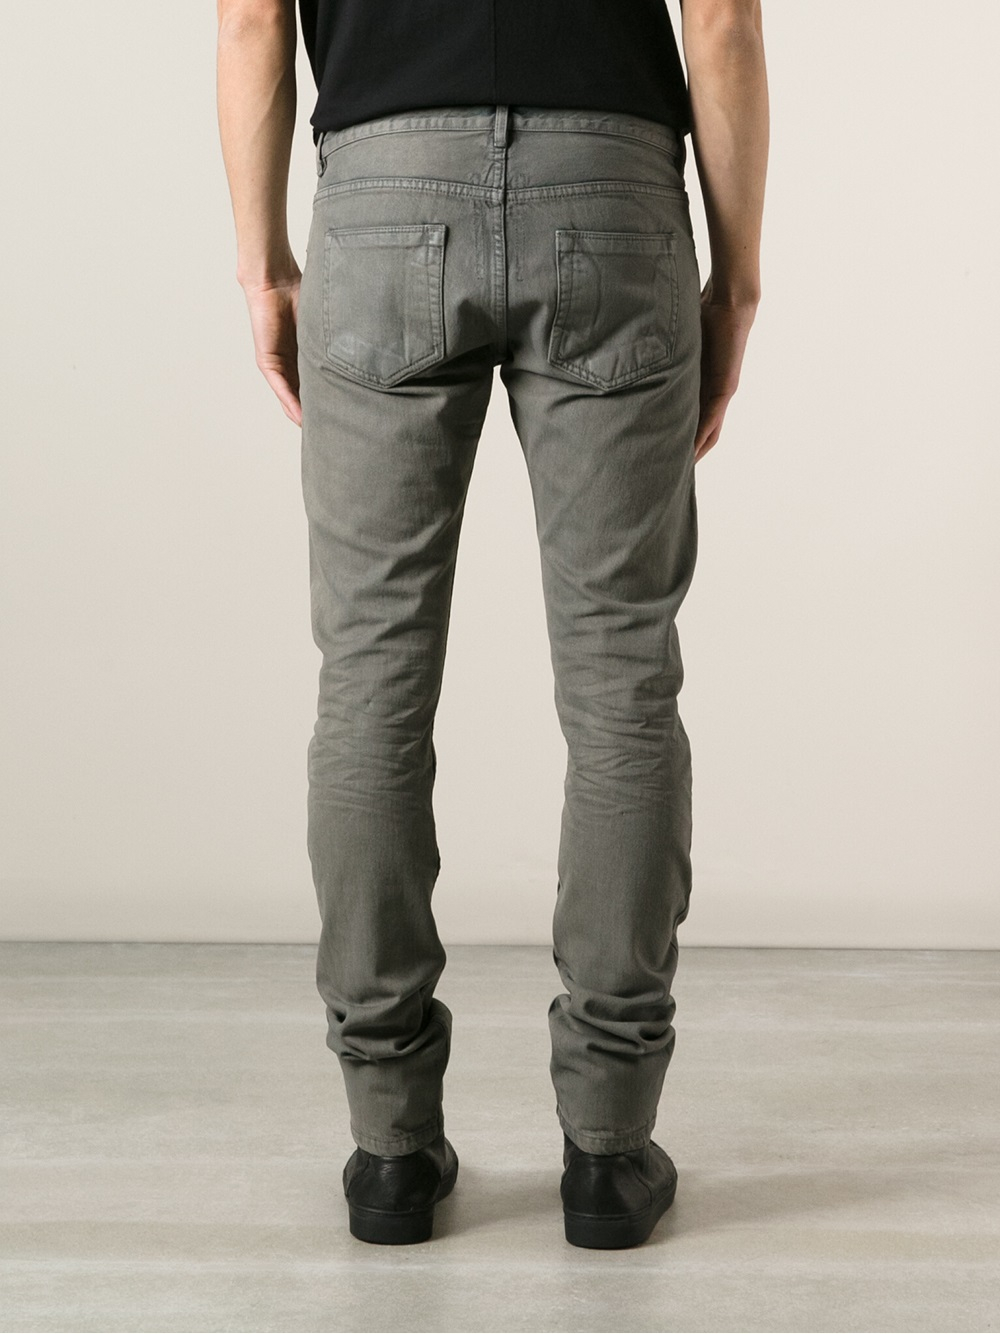 Rick Owens DRKSHDW Detroit Jeans in Grey (Gray) for Men - Lyst